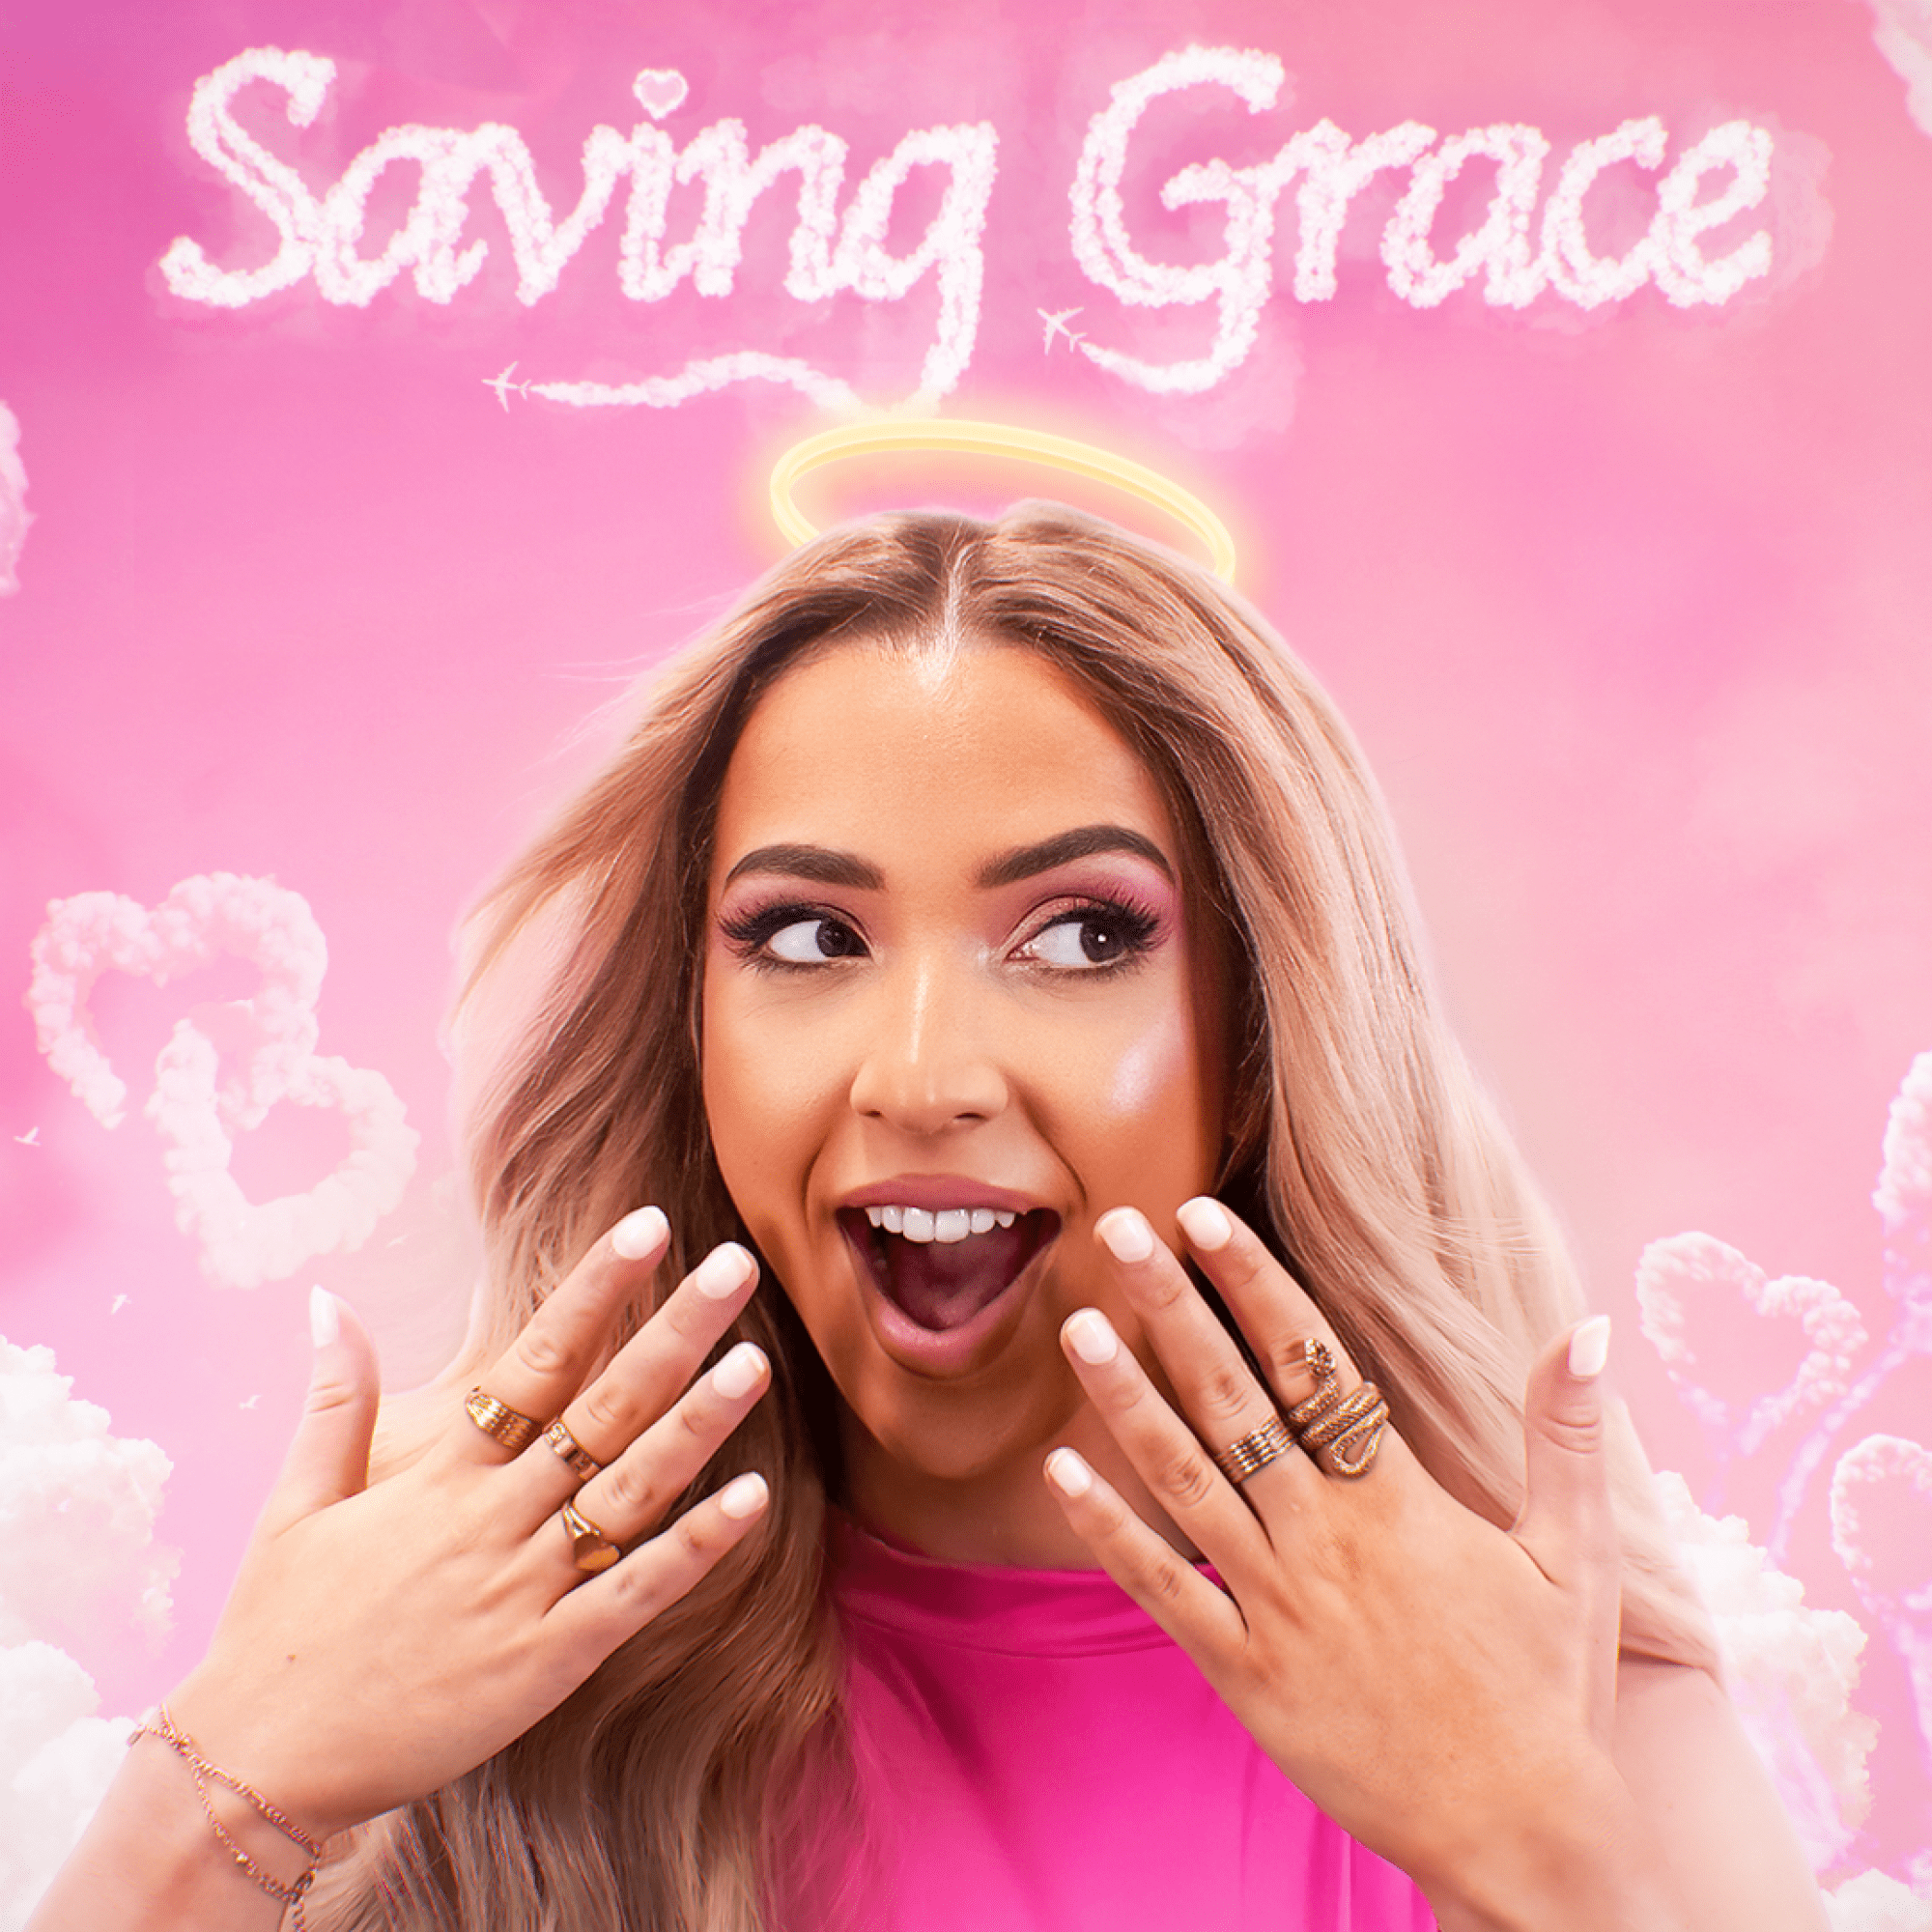 Saving grace 06